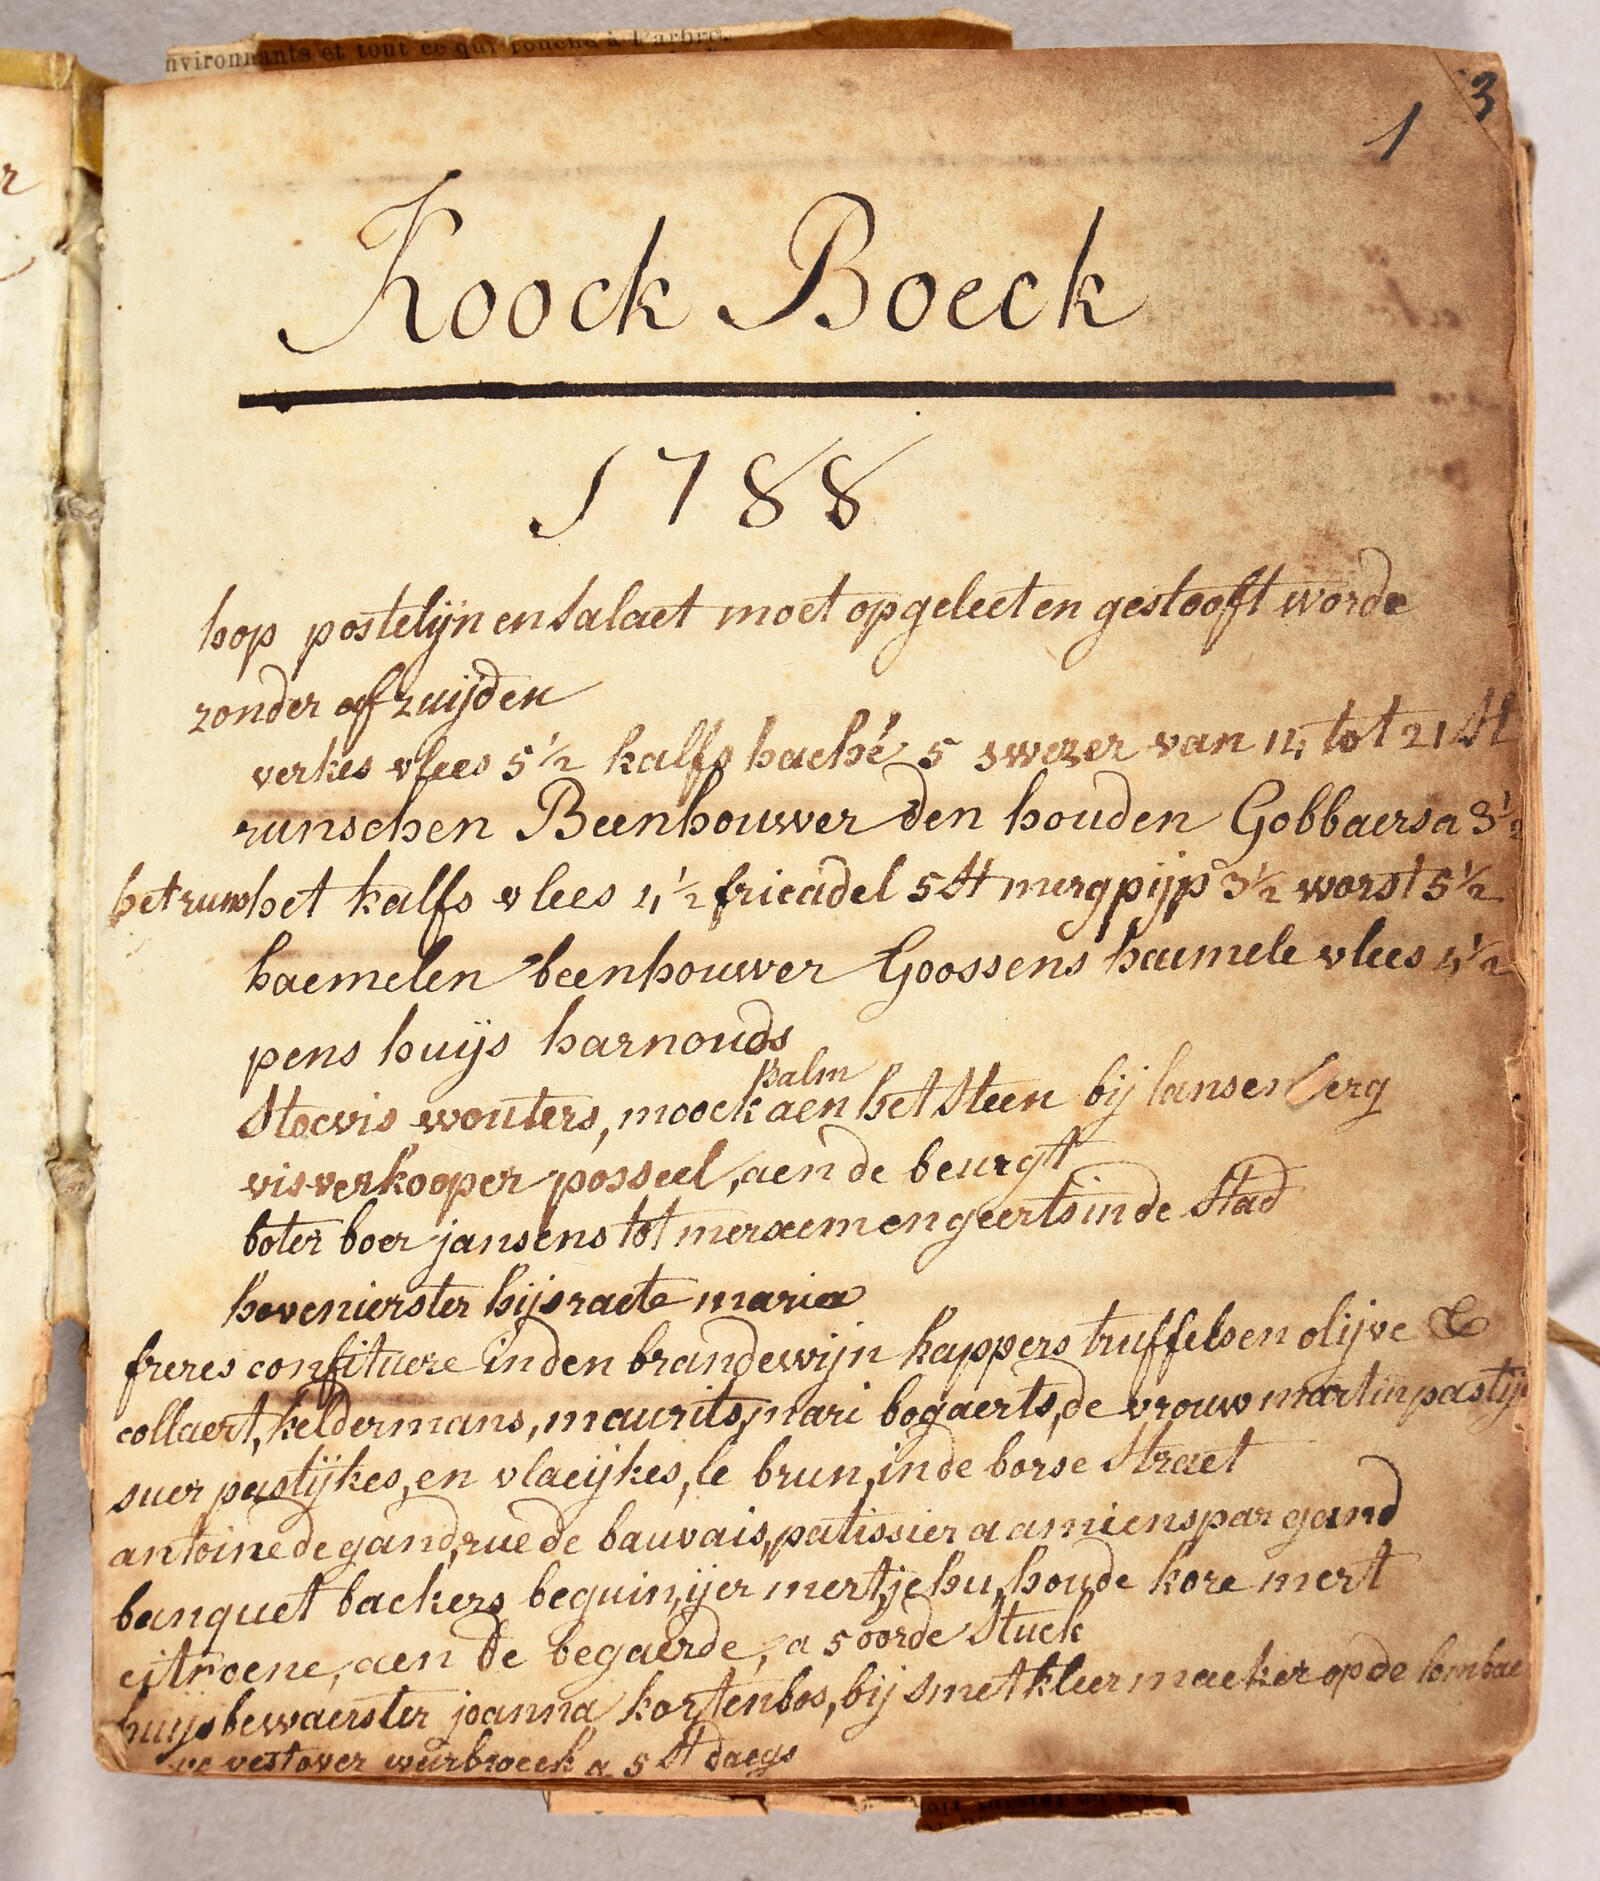 Sterrenchef 1788 Koock Boeck